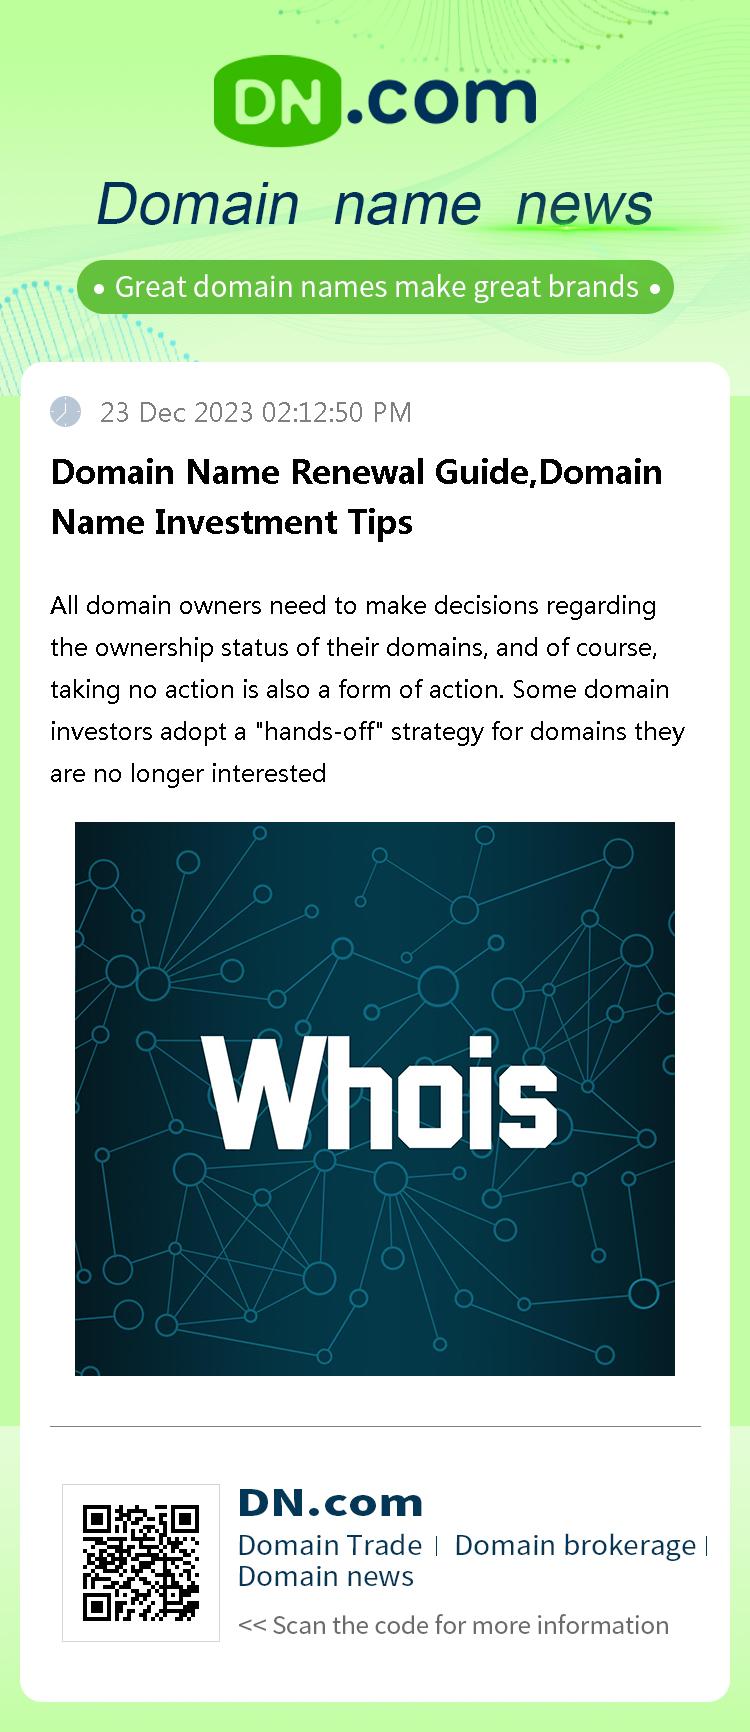 Domain Name Renewal Guide,Domain Name Investment Tips